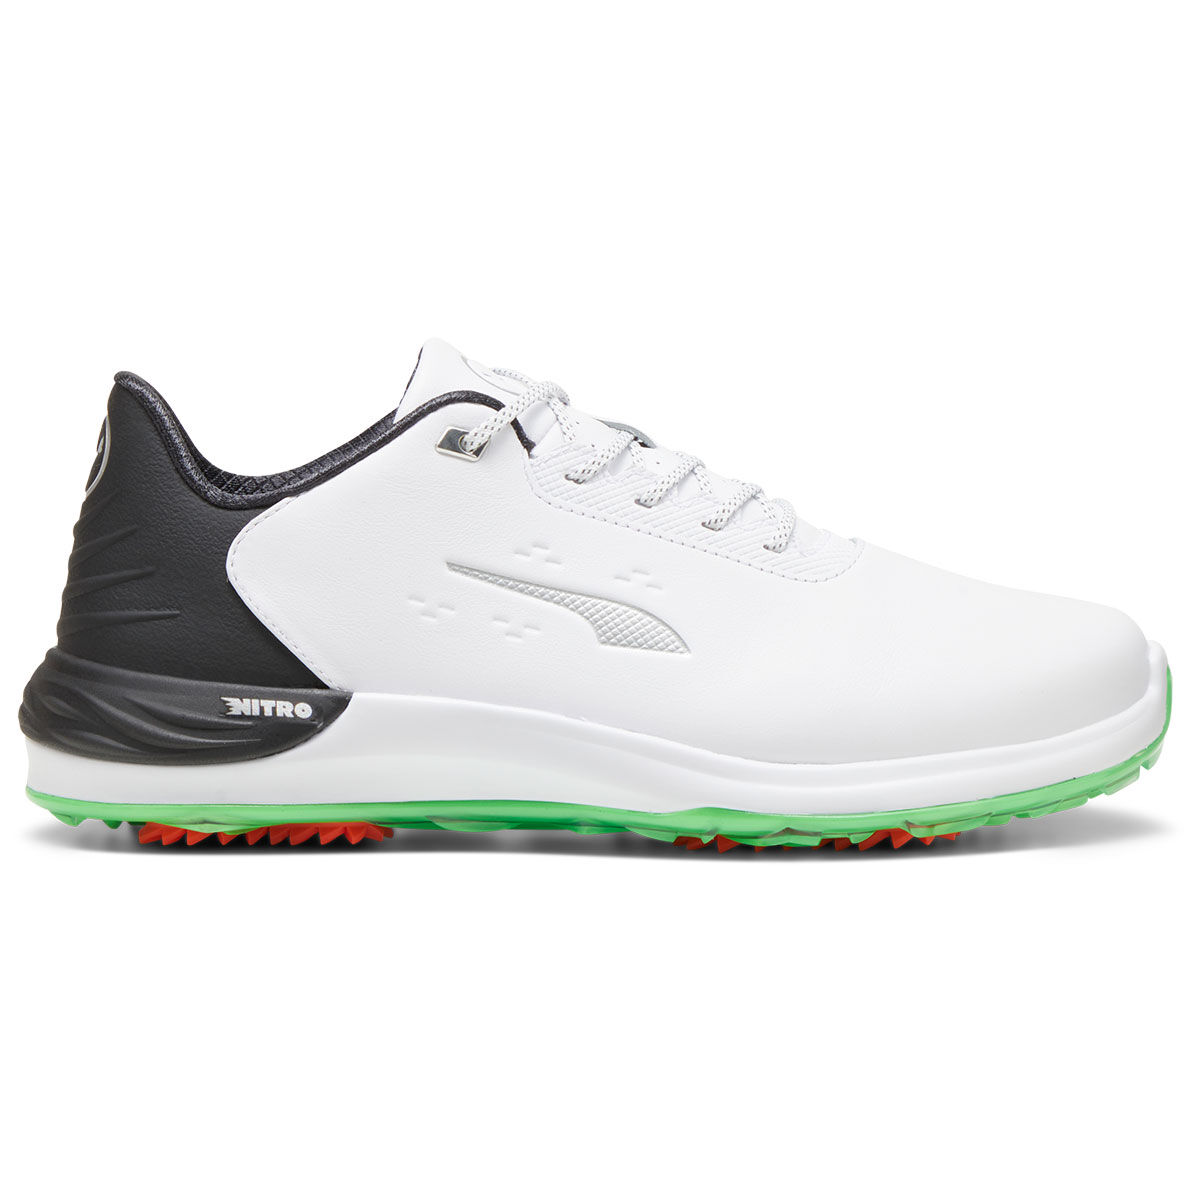 PUMA Men’s Phantomcat NITRO + Waterproof Spiked Golf Shoes, Mens, White/black/fluro green pes, 10 | American Golf